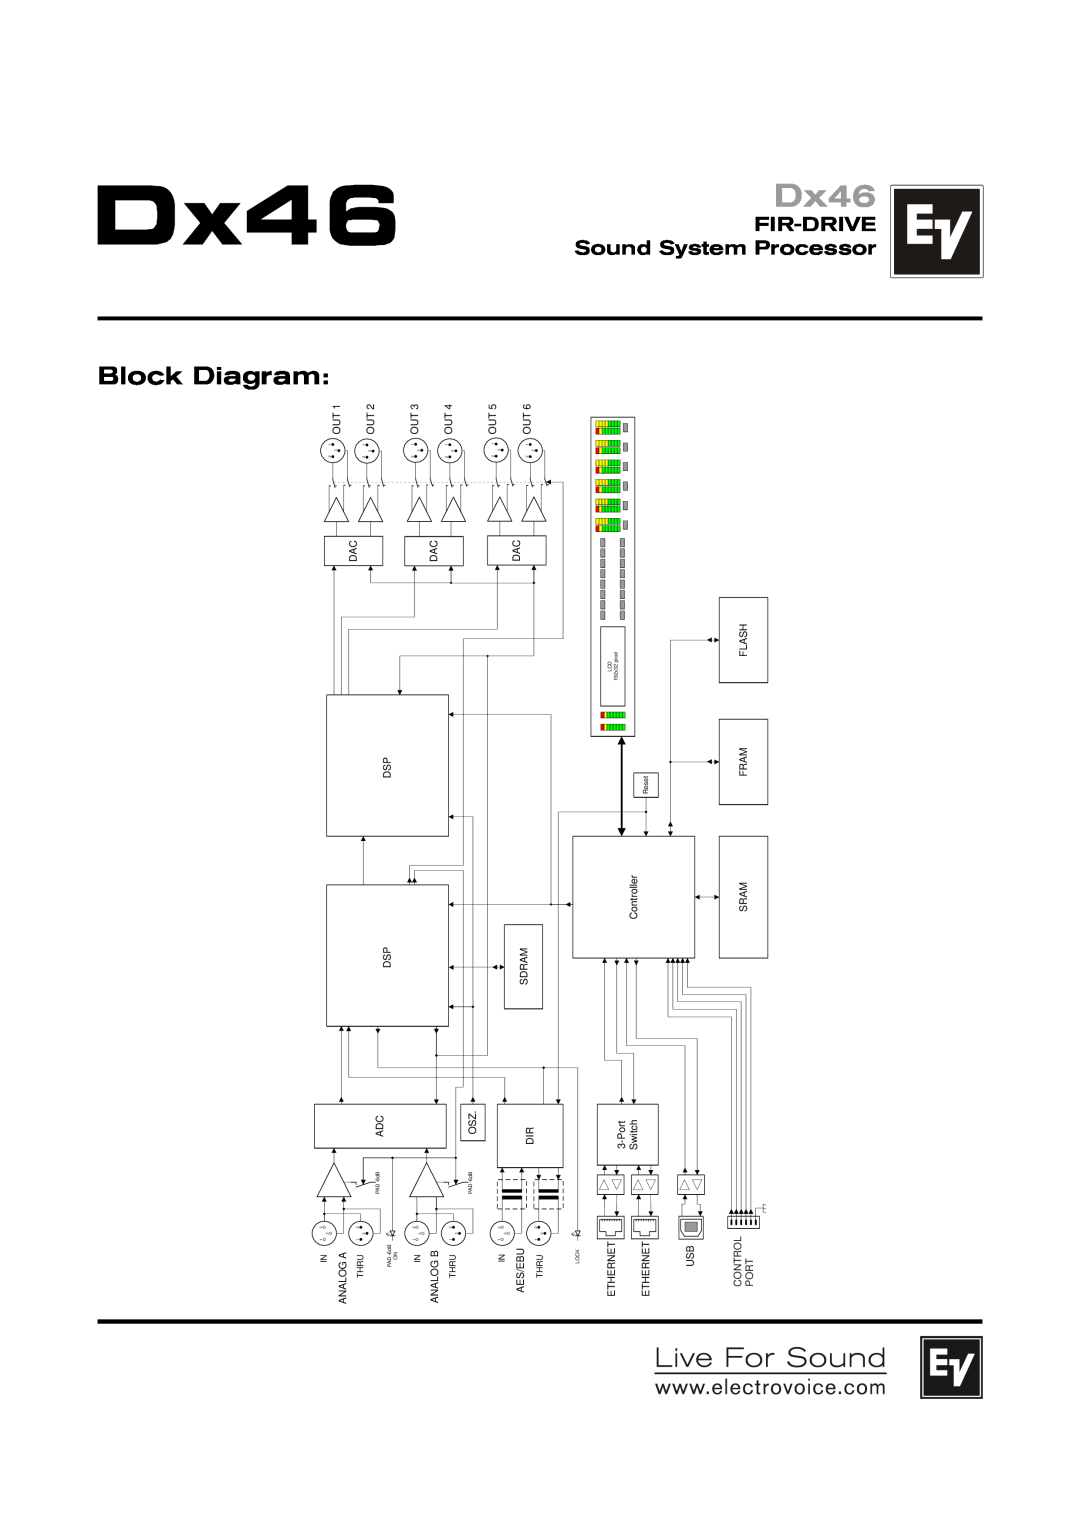 Electro-Voice DX46 technical specifications Block Diagram, Sound System Processor, Control Port 